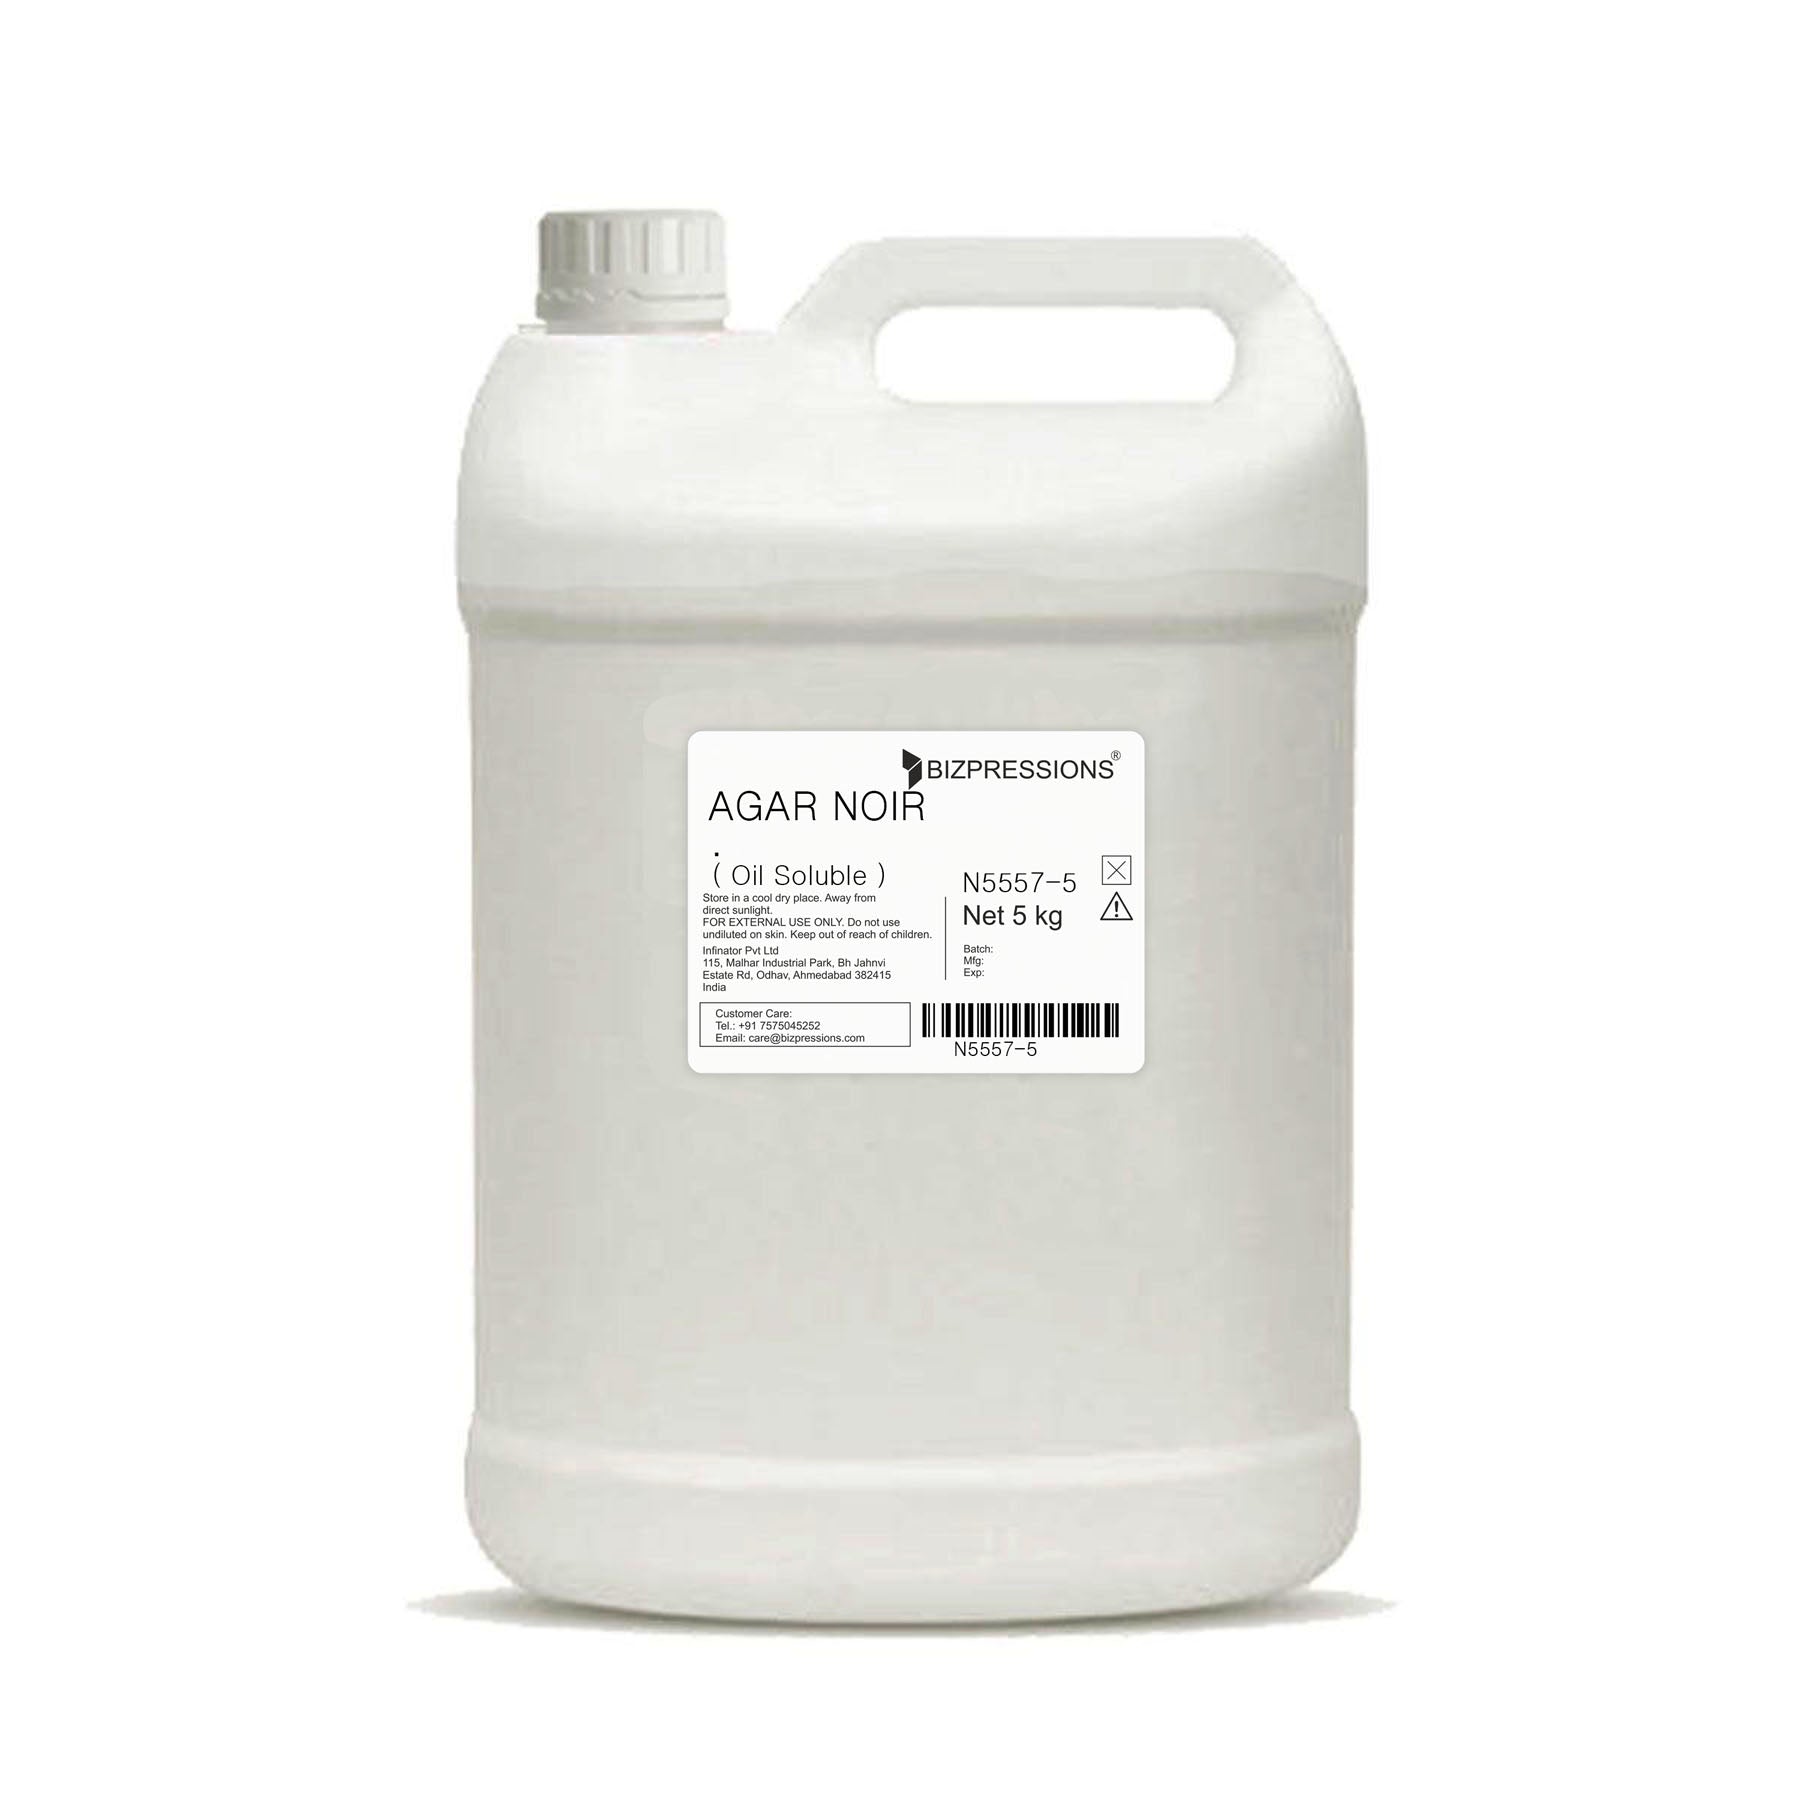 AGAR NOIR - Fragrance ( Oil Soluble ) - 5 kg